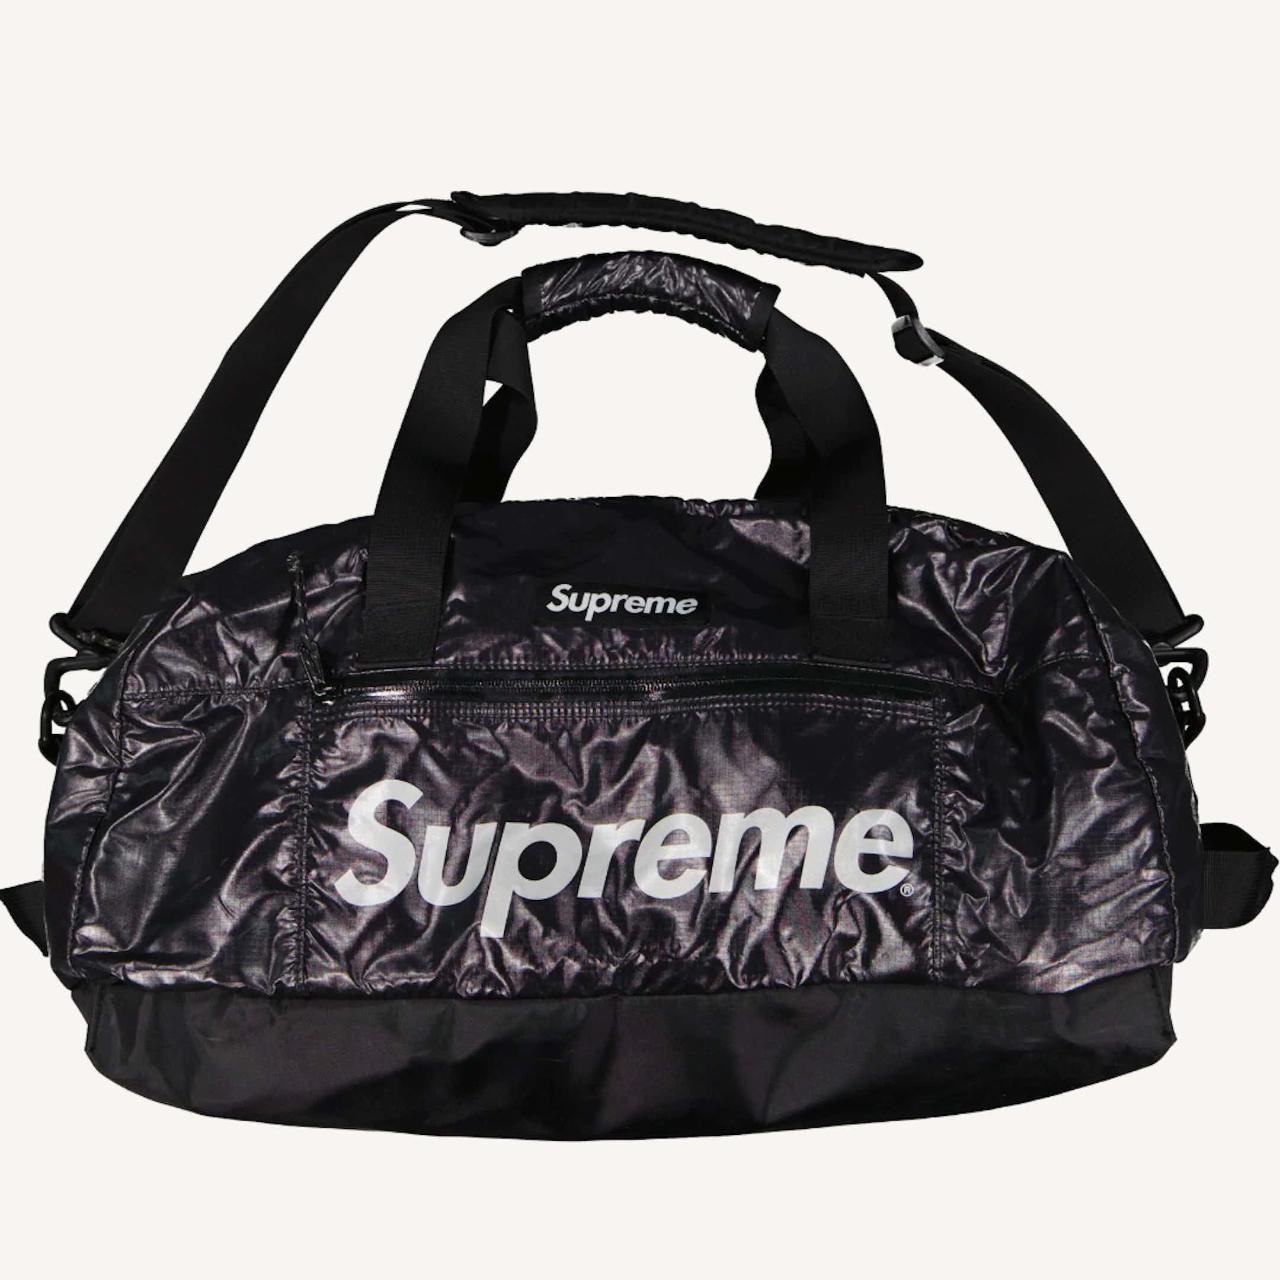 Supreme Nike Leather Duffle Bag Black